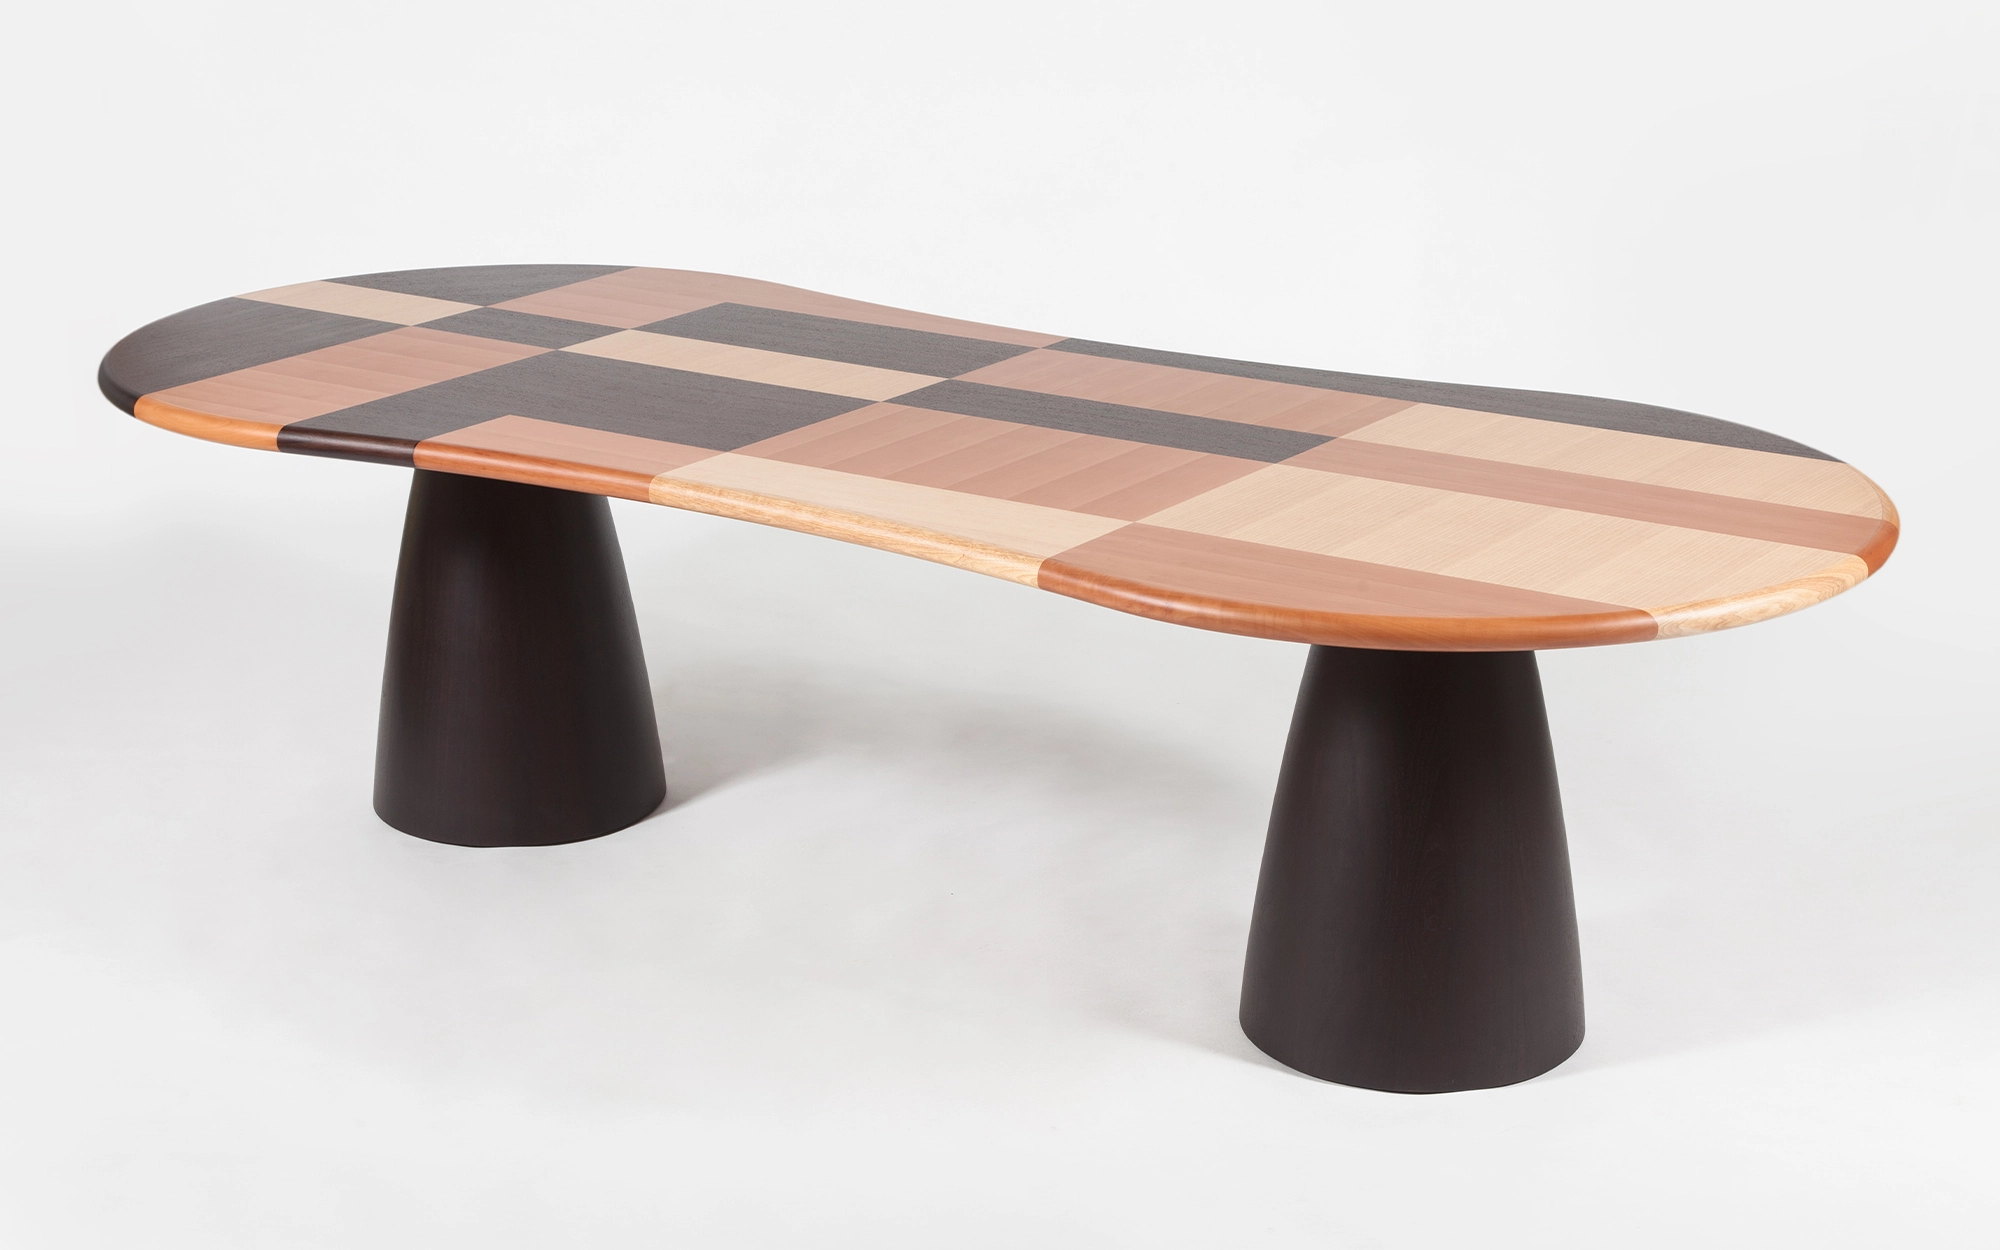 Firenze Table - Alessandro Mendini - Coffee table - Galerie kreo